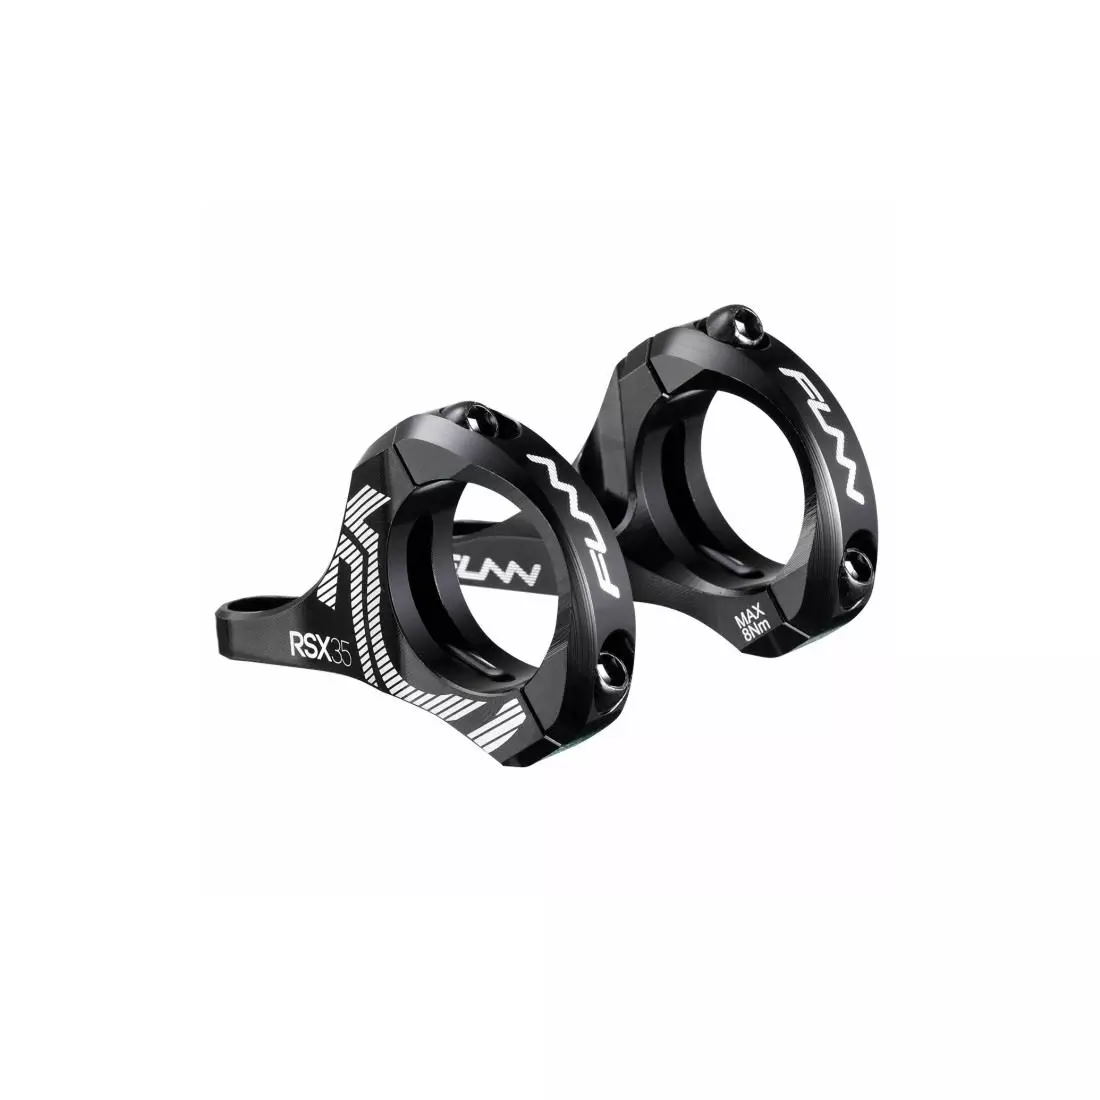 FUNN RSX III bicycle handlebar bracket 45-50/35/30 mm dedicated to shock absorbers ROCK SHOCK BOXXER